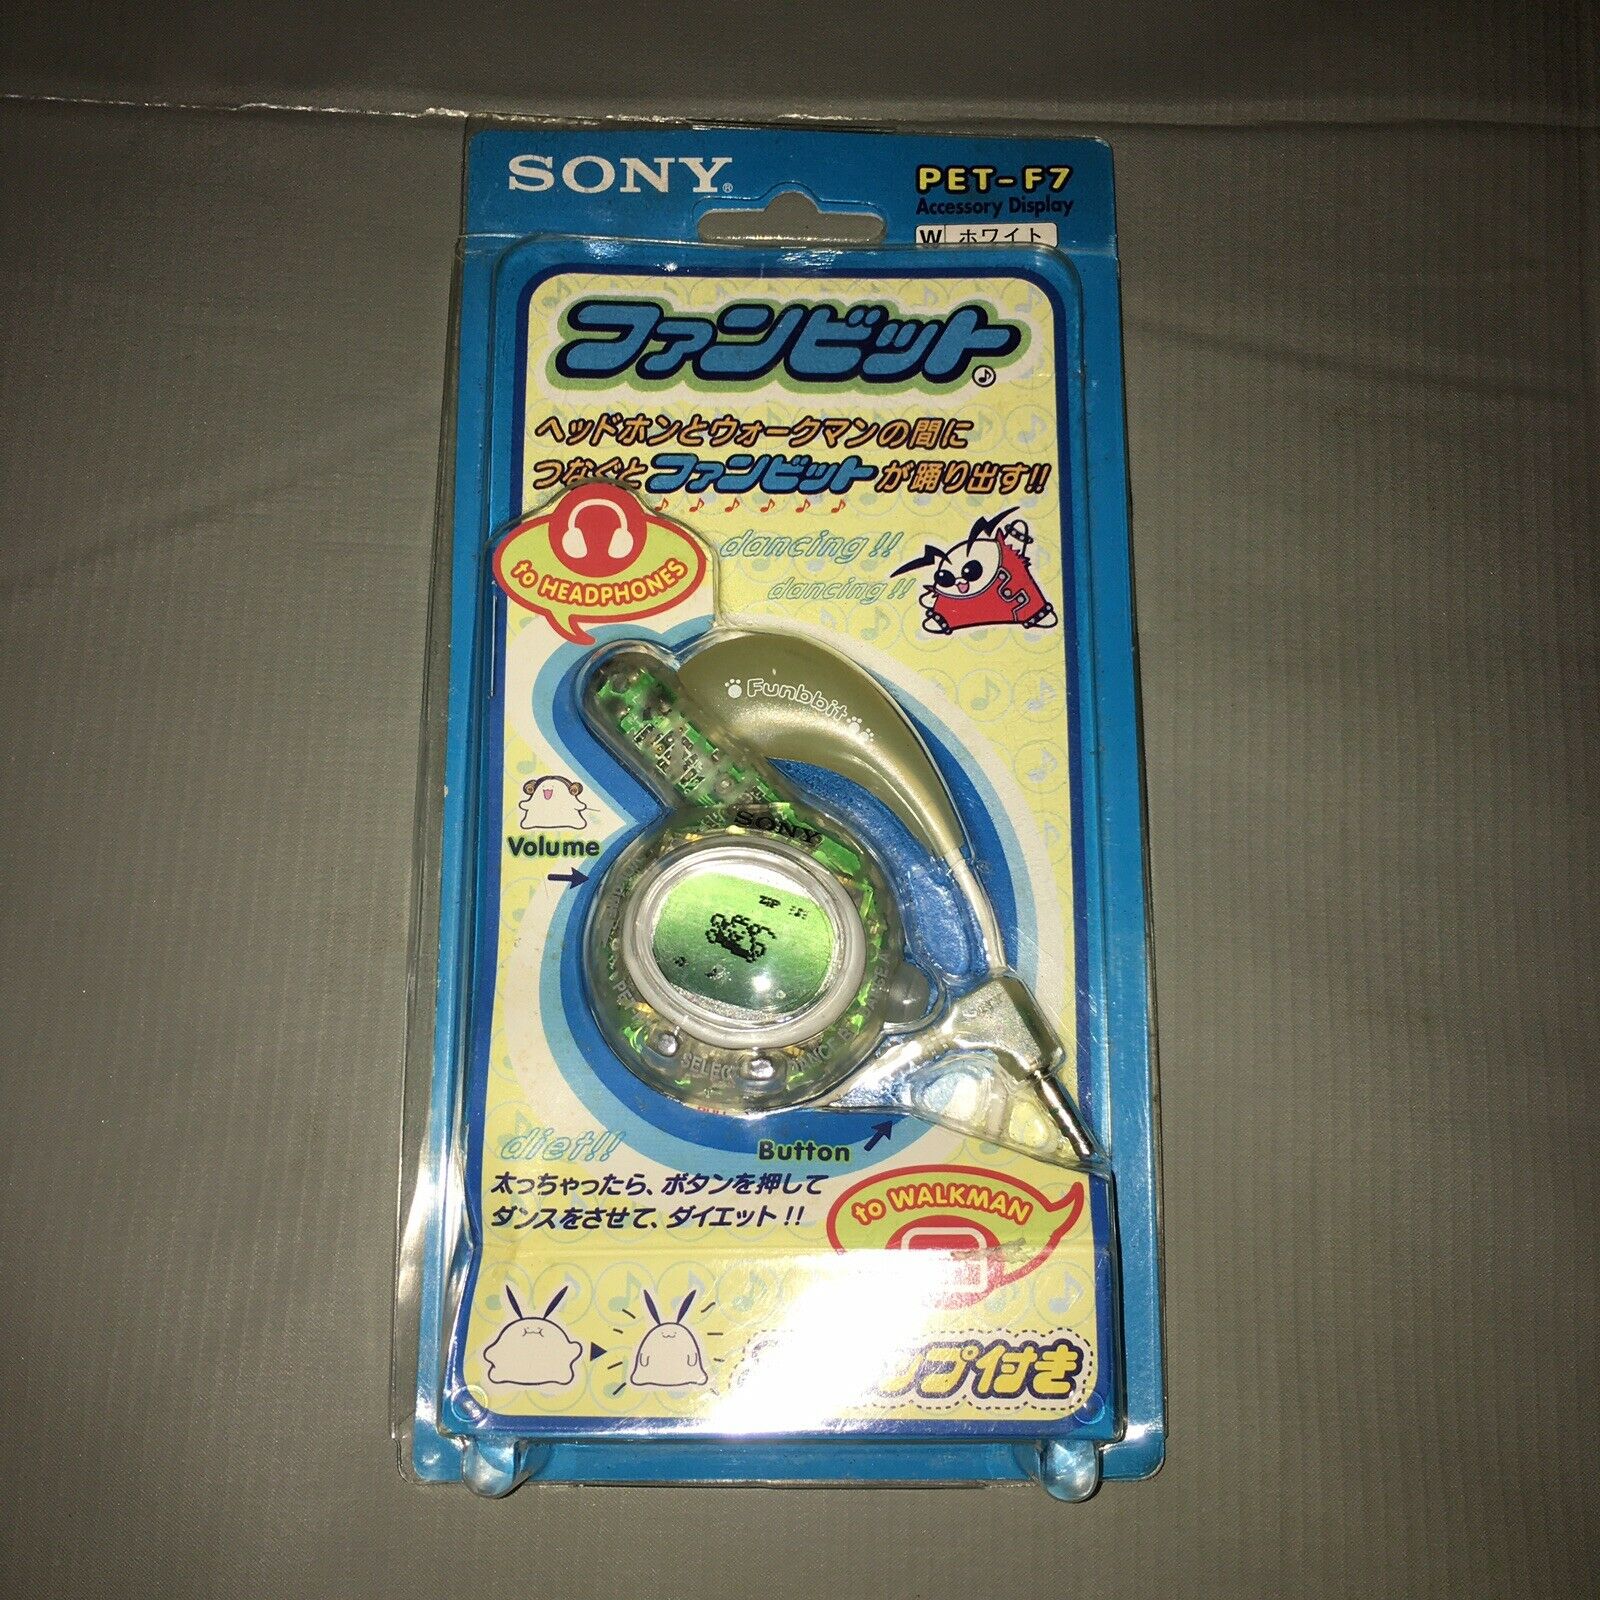 Sony Funbbit Pet-F7 “Music Tamagochi” for Walkman 1998 Japan - READ DESCRIPTION